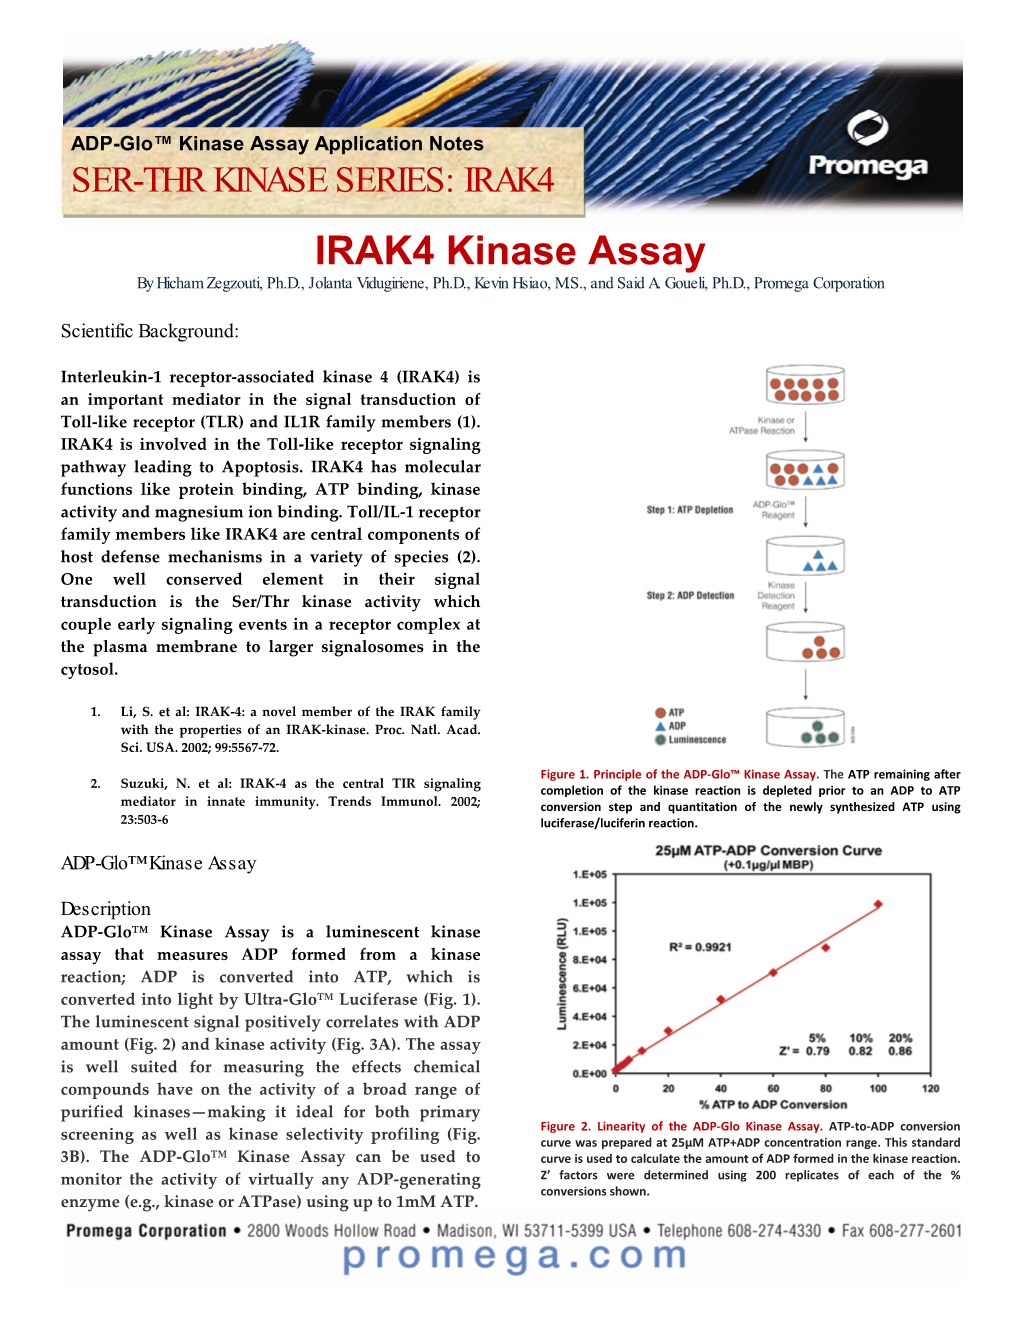 IRAK4 Kinase Assay by Hicham Zegzouti, Ph.D., Jolanta Vidugiriene, Ph.D., Kevin Hsiao, M.S., and Said A